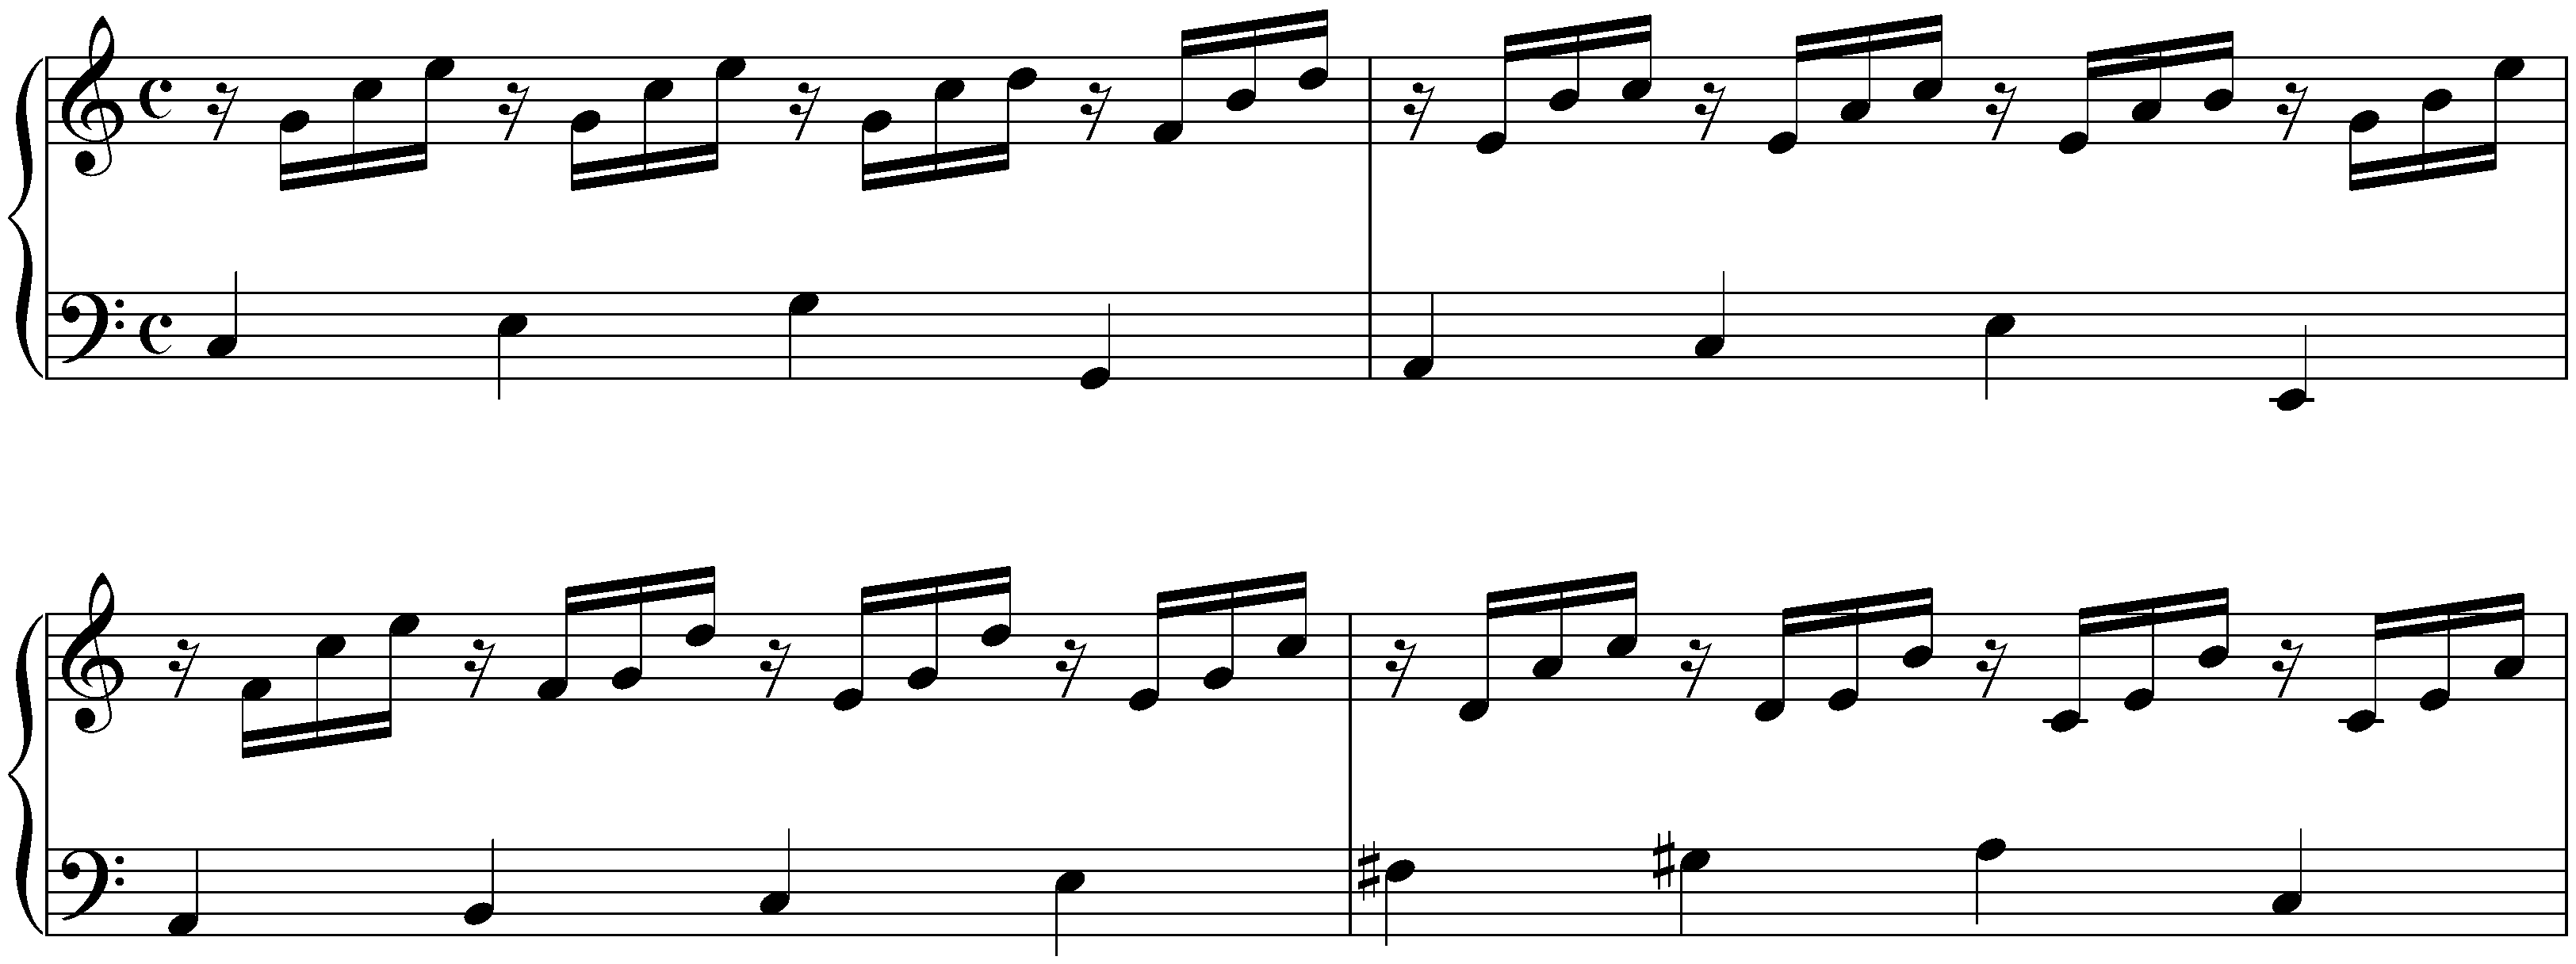 Nine little Preludes from the Notebook for Wilhelm Friedemann Bach, BWV 924–932; 1. C major, BWV 924 (alternative version)